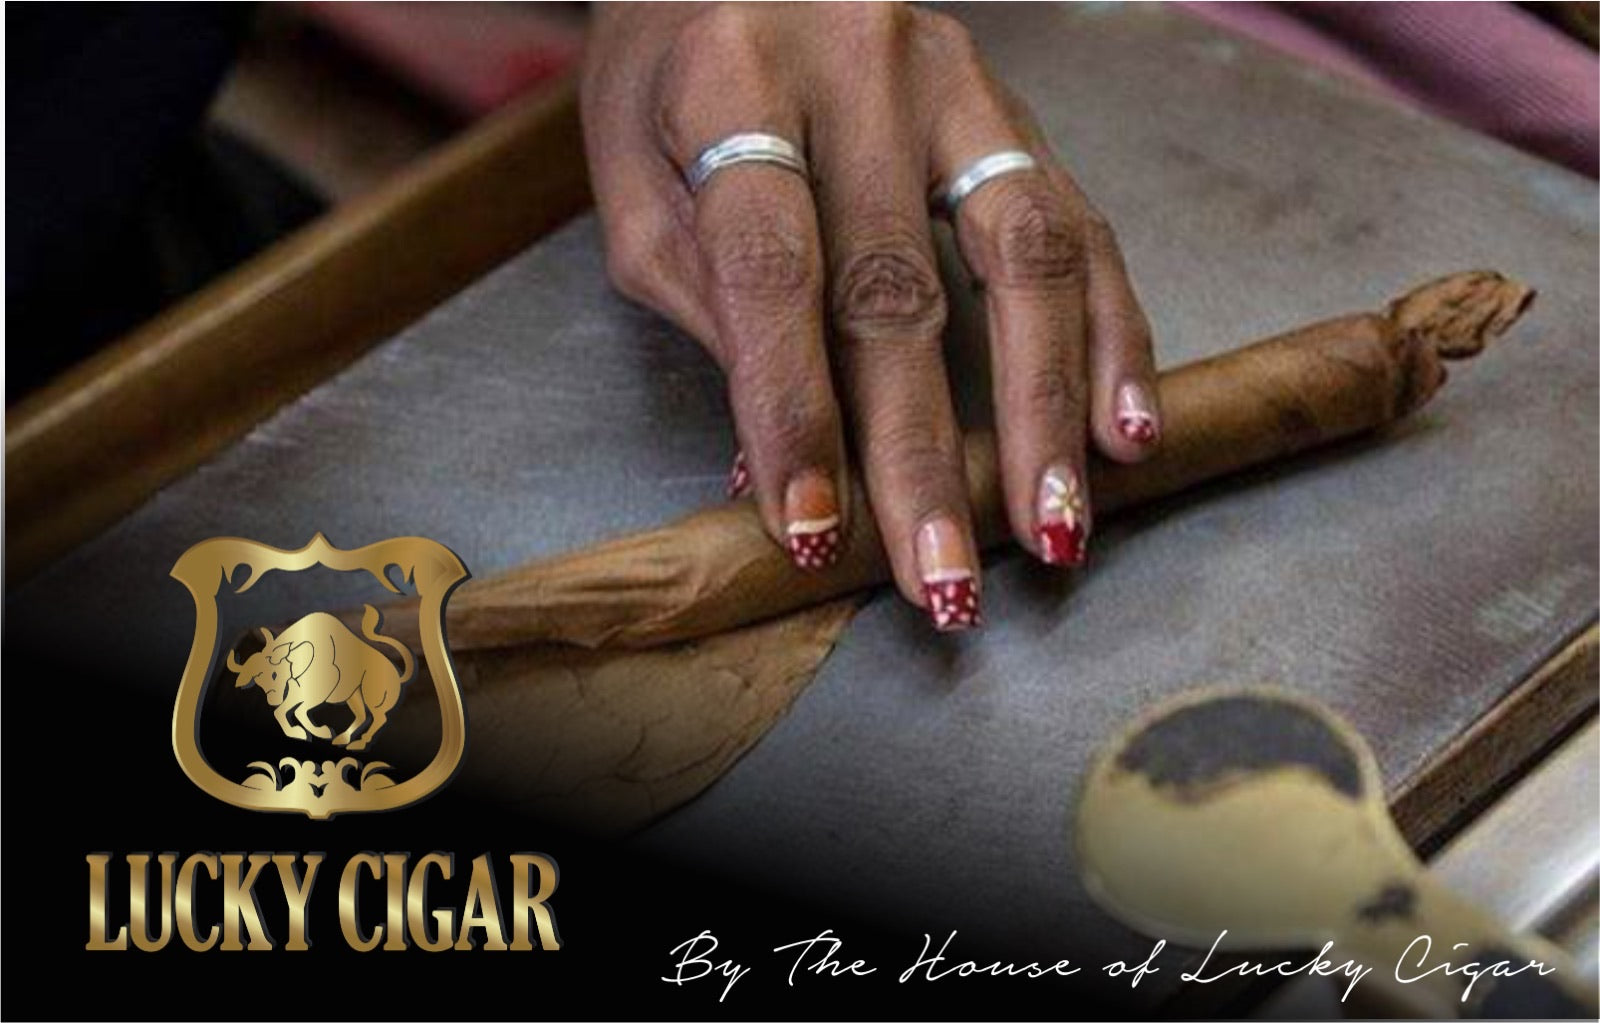 Habano Cigars